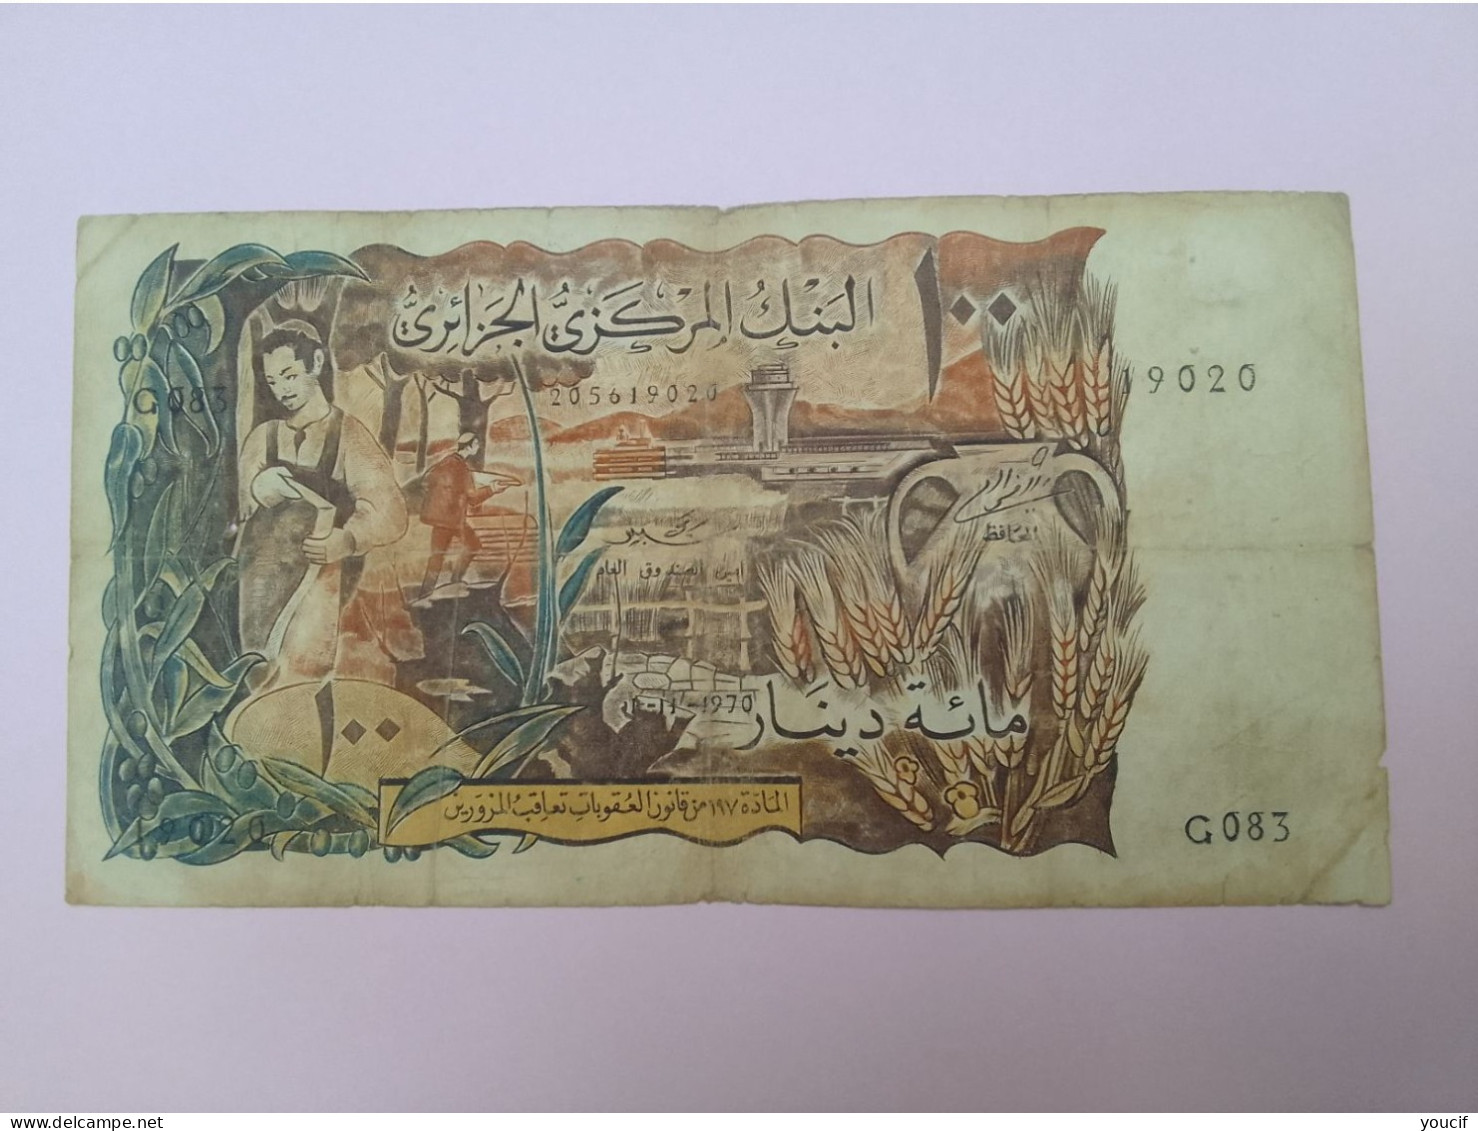 Billet De Banque D Algerie 100 Dinars 01 Novembre 1970 - Algerien